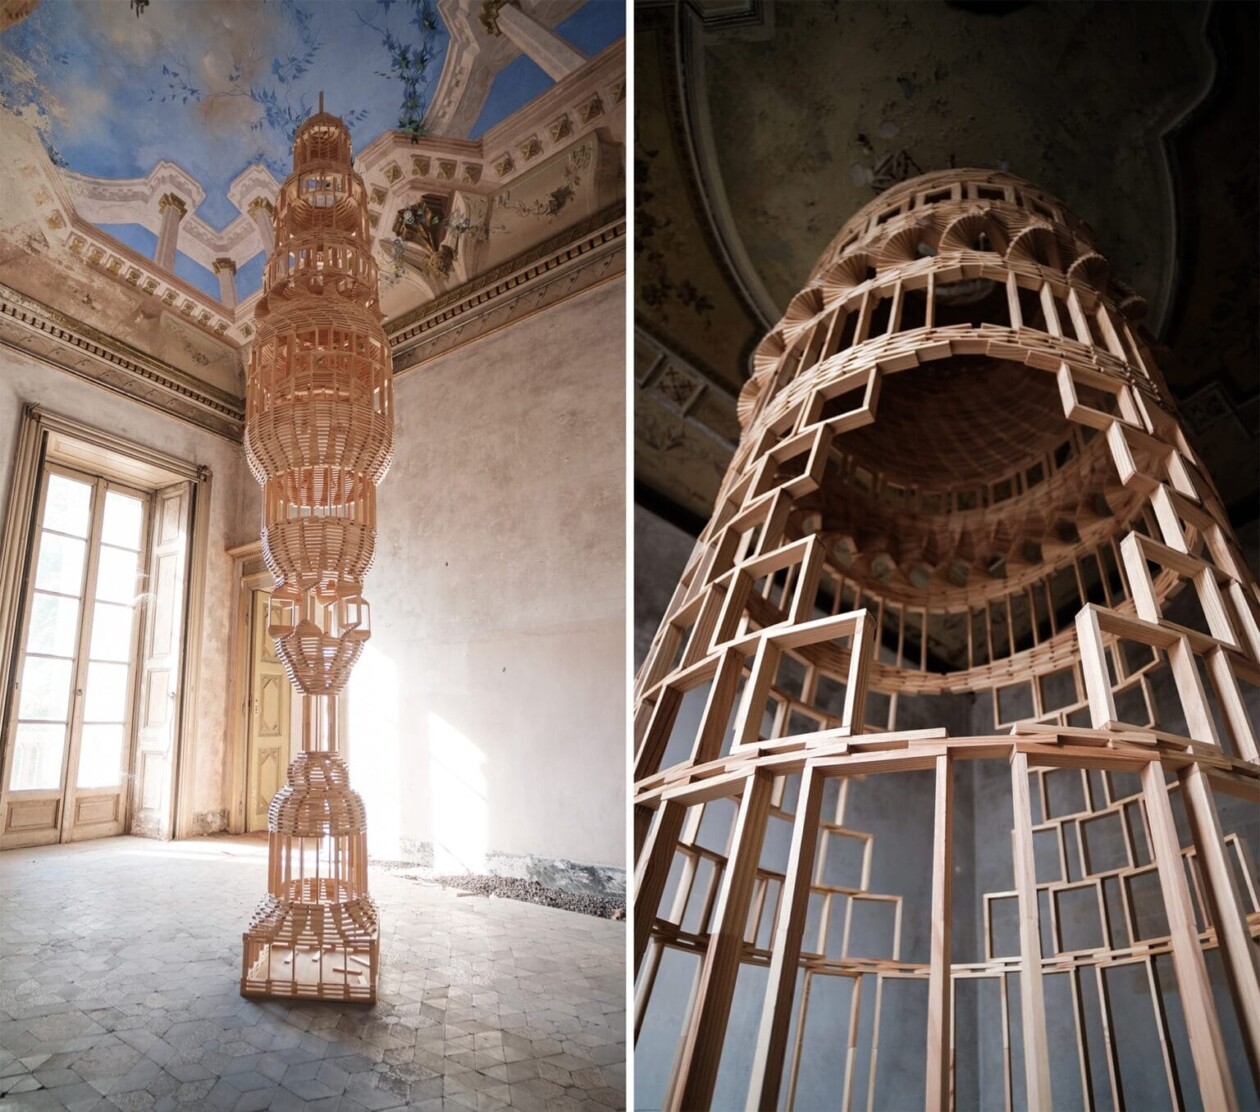 Balancing Act, The Gravity Defying Architectural Installations Of Raffaele Salvoldi (5)